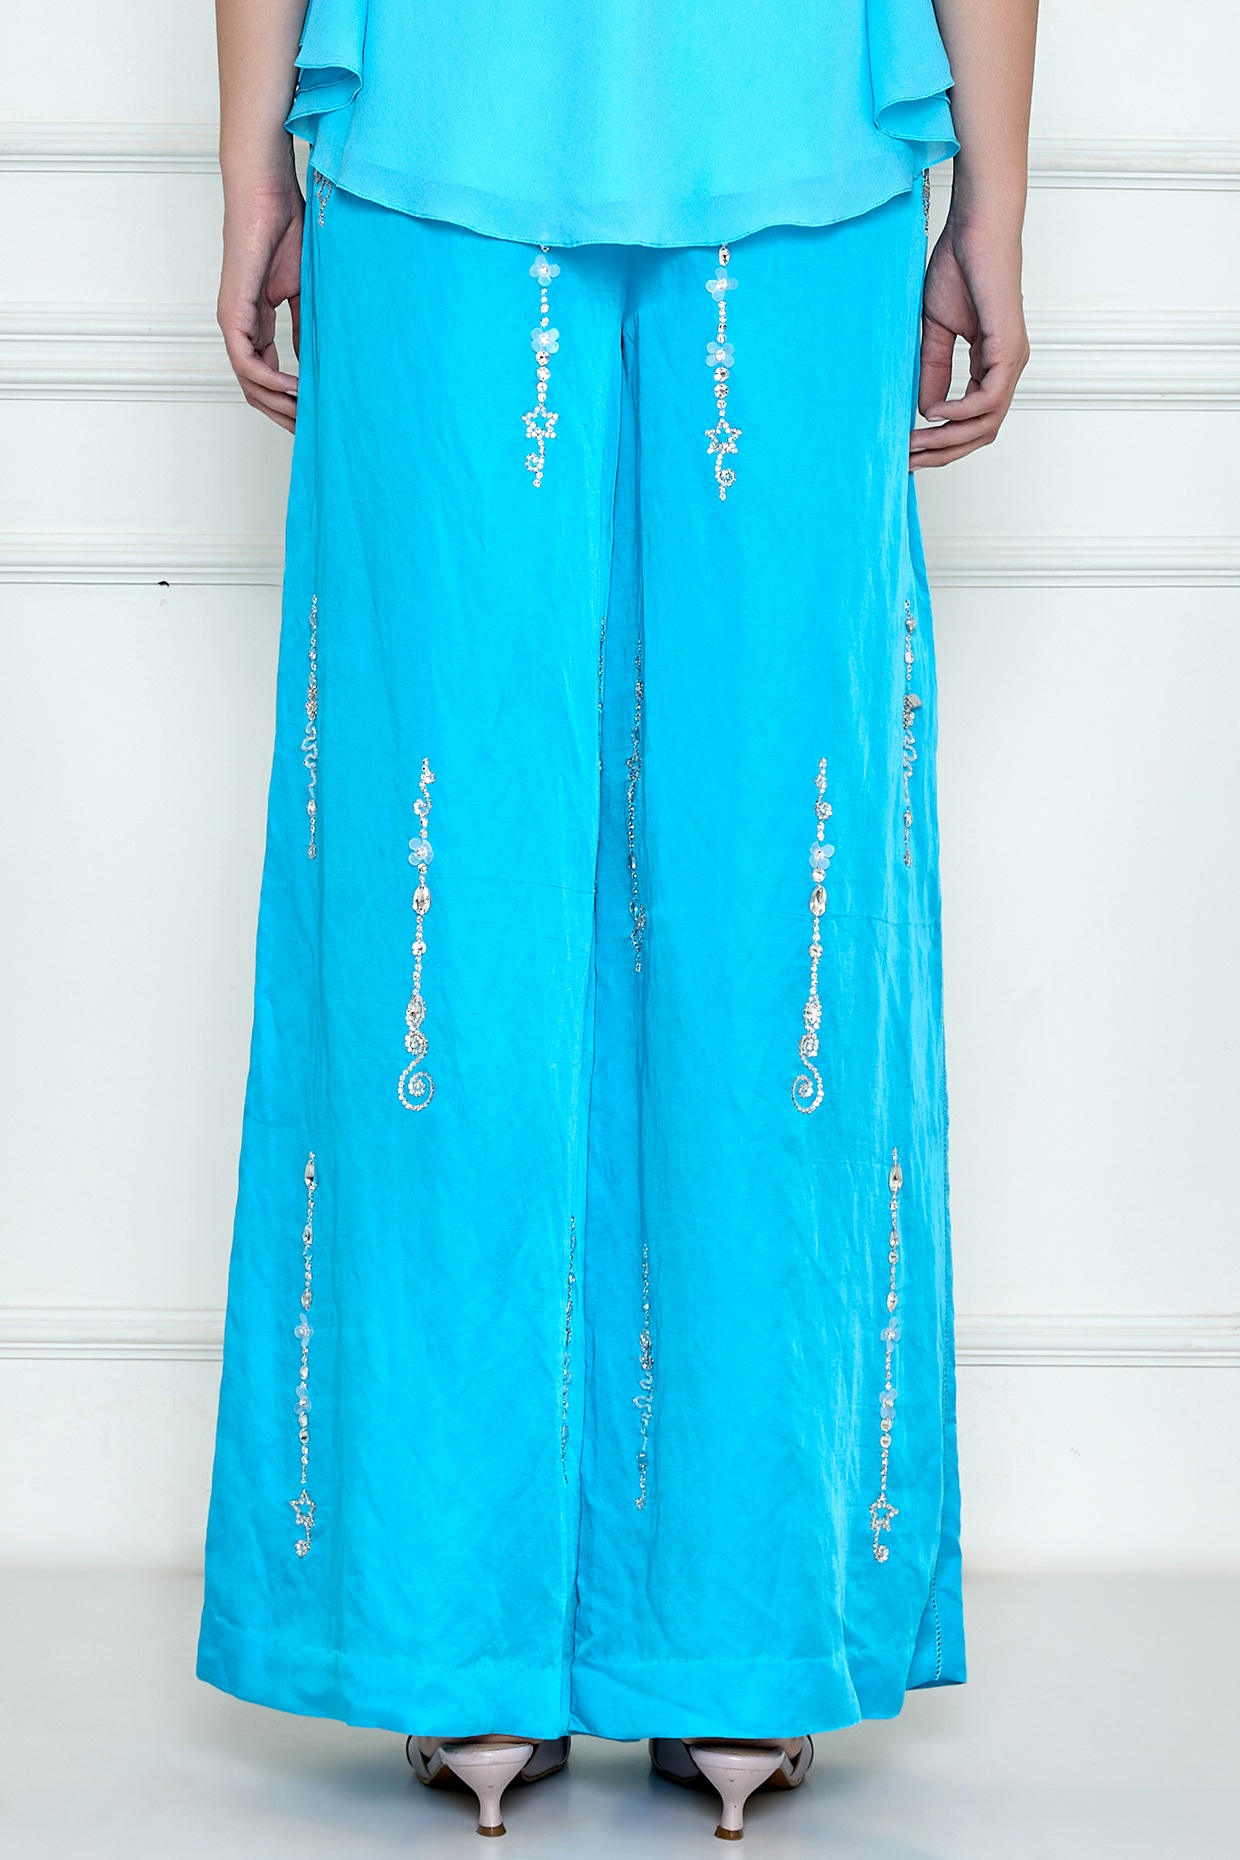 Royal Blue Satin High Waist Flare Trousers -Tisha – Rebellious Fashion